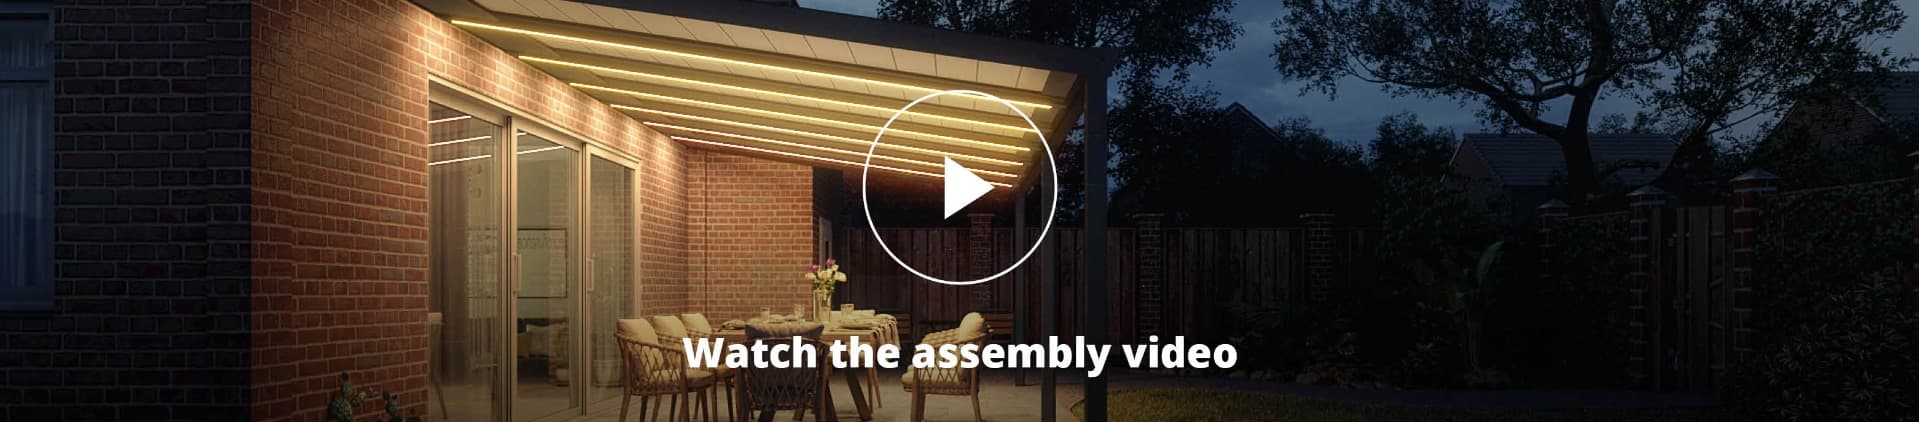 Assembly video Gumax® lighting system